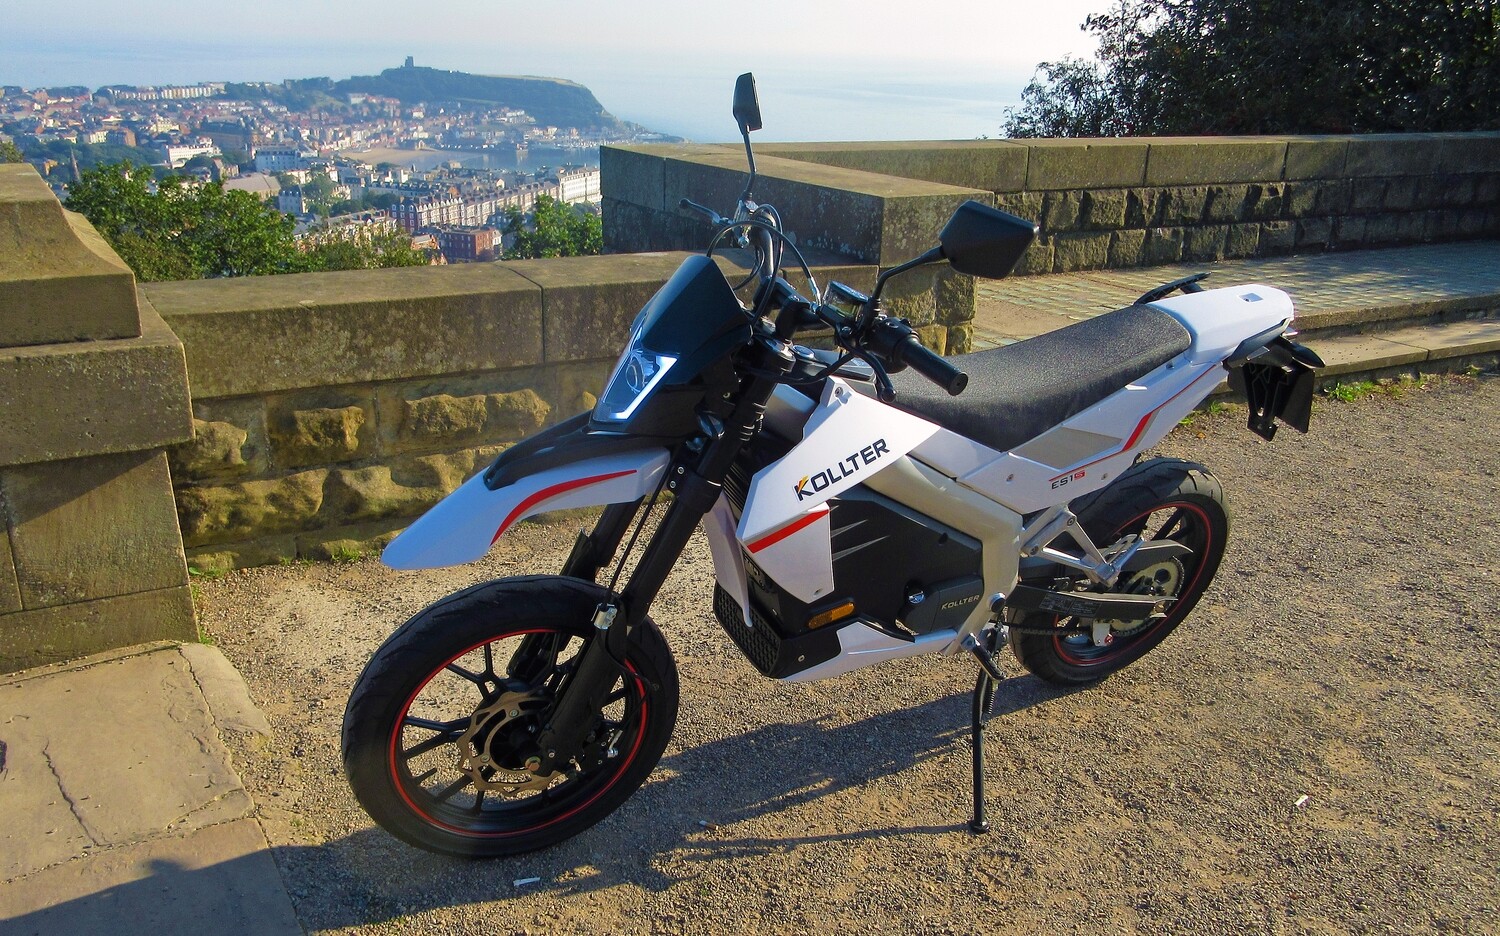 Kollter Es-1 Road Electric Motorcycle